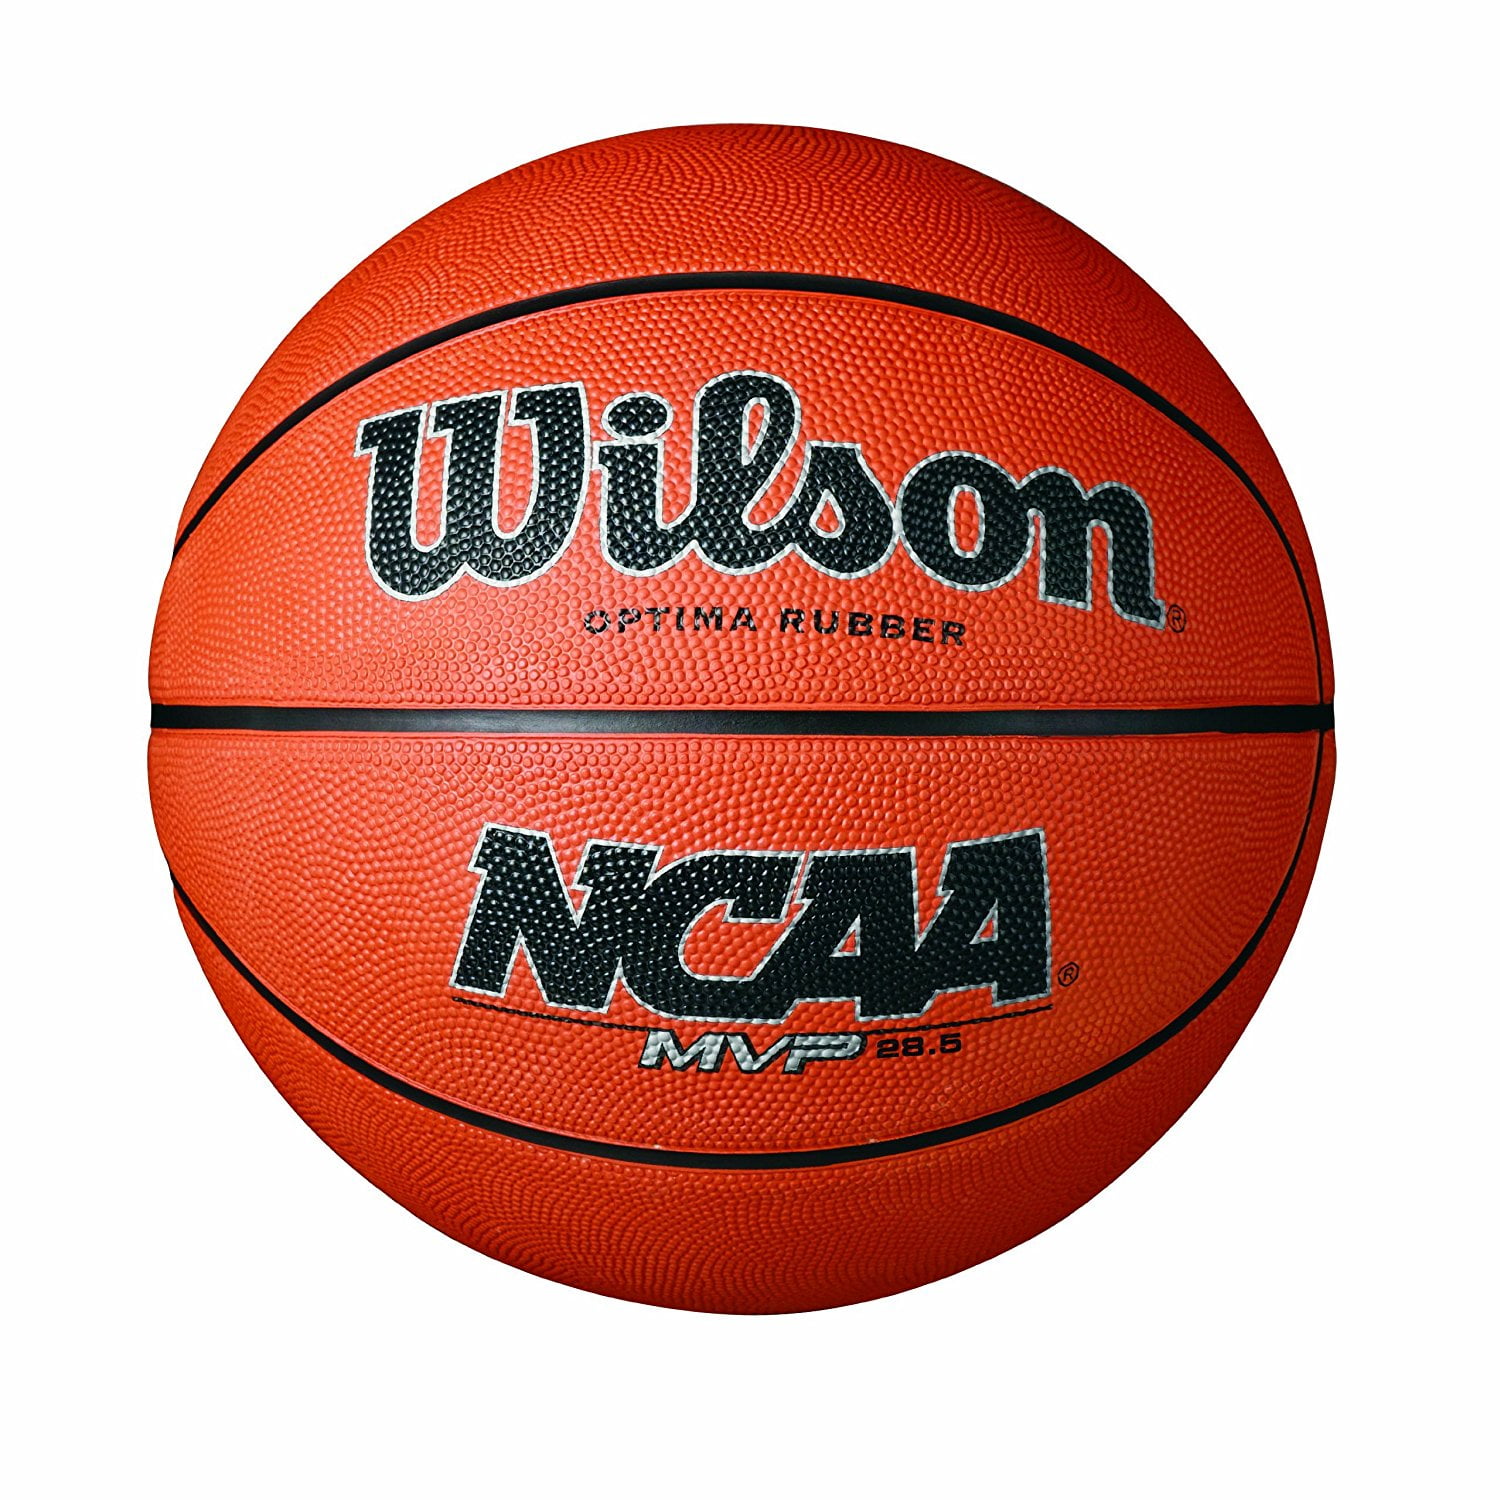 Wilson Basketball Killer Crossover Outdoor Orange White Intermediate 28.5-inch for sale online 